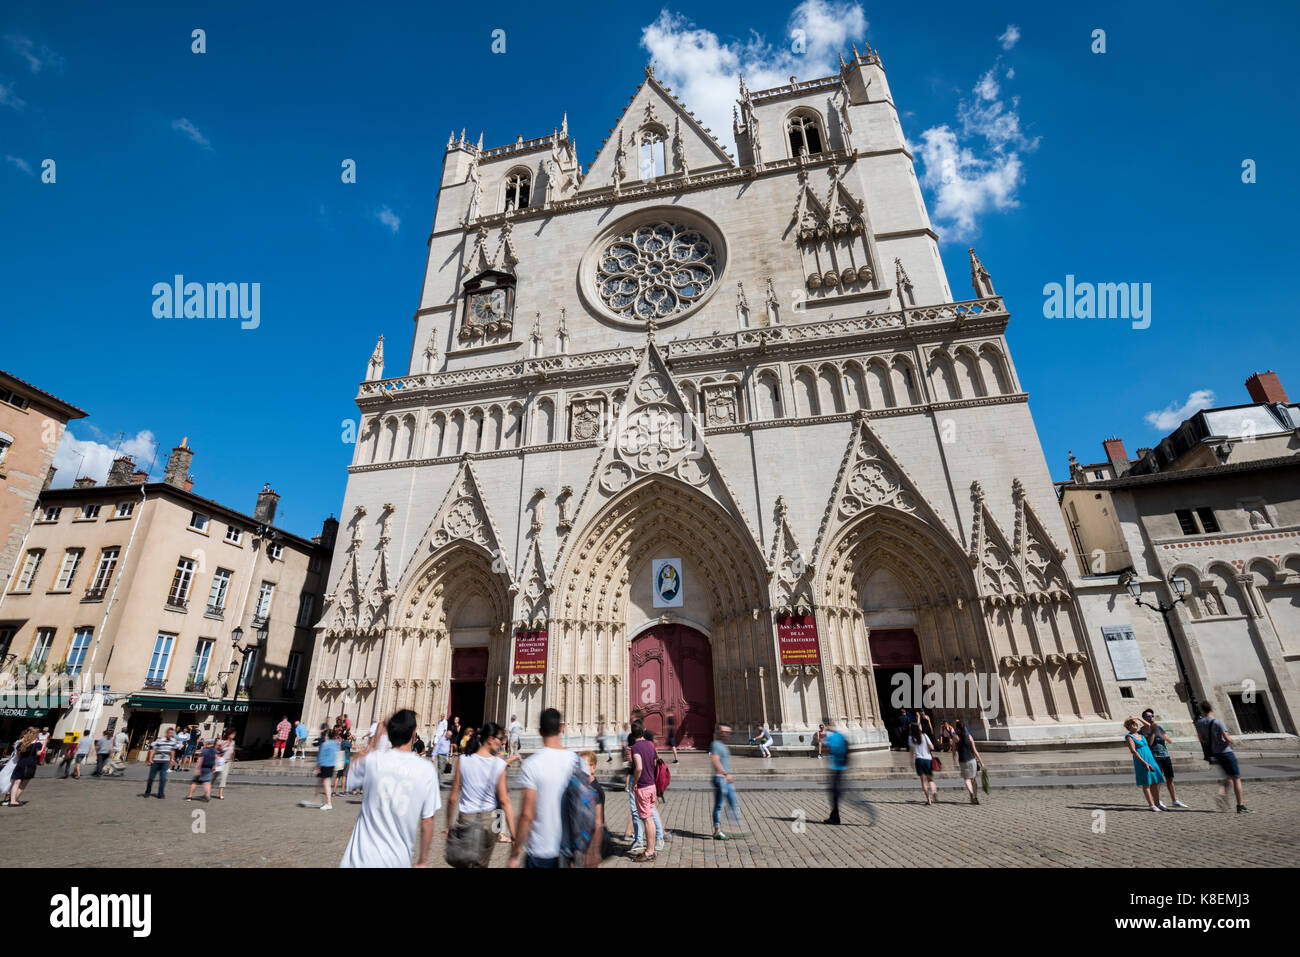 Cathedral Saint-Jean-Baptiste de Lyon with crowd, Roman Catholic church located on Place Saint-Jean in Lyon, France Stock Photo